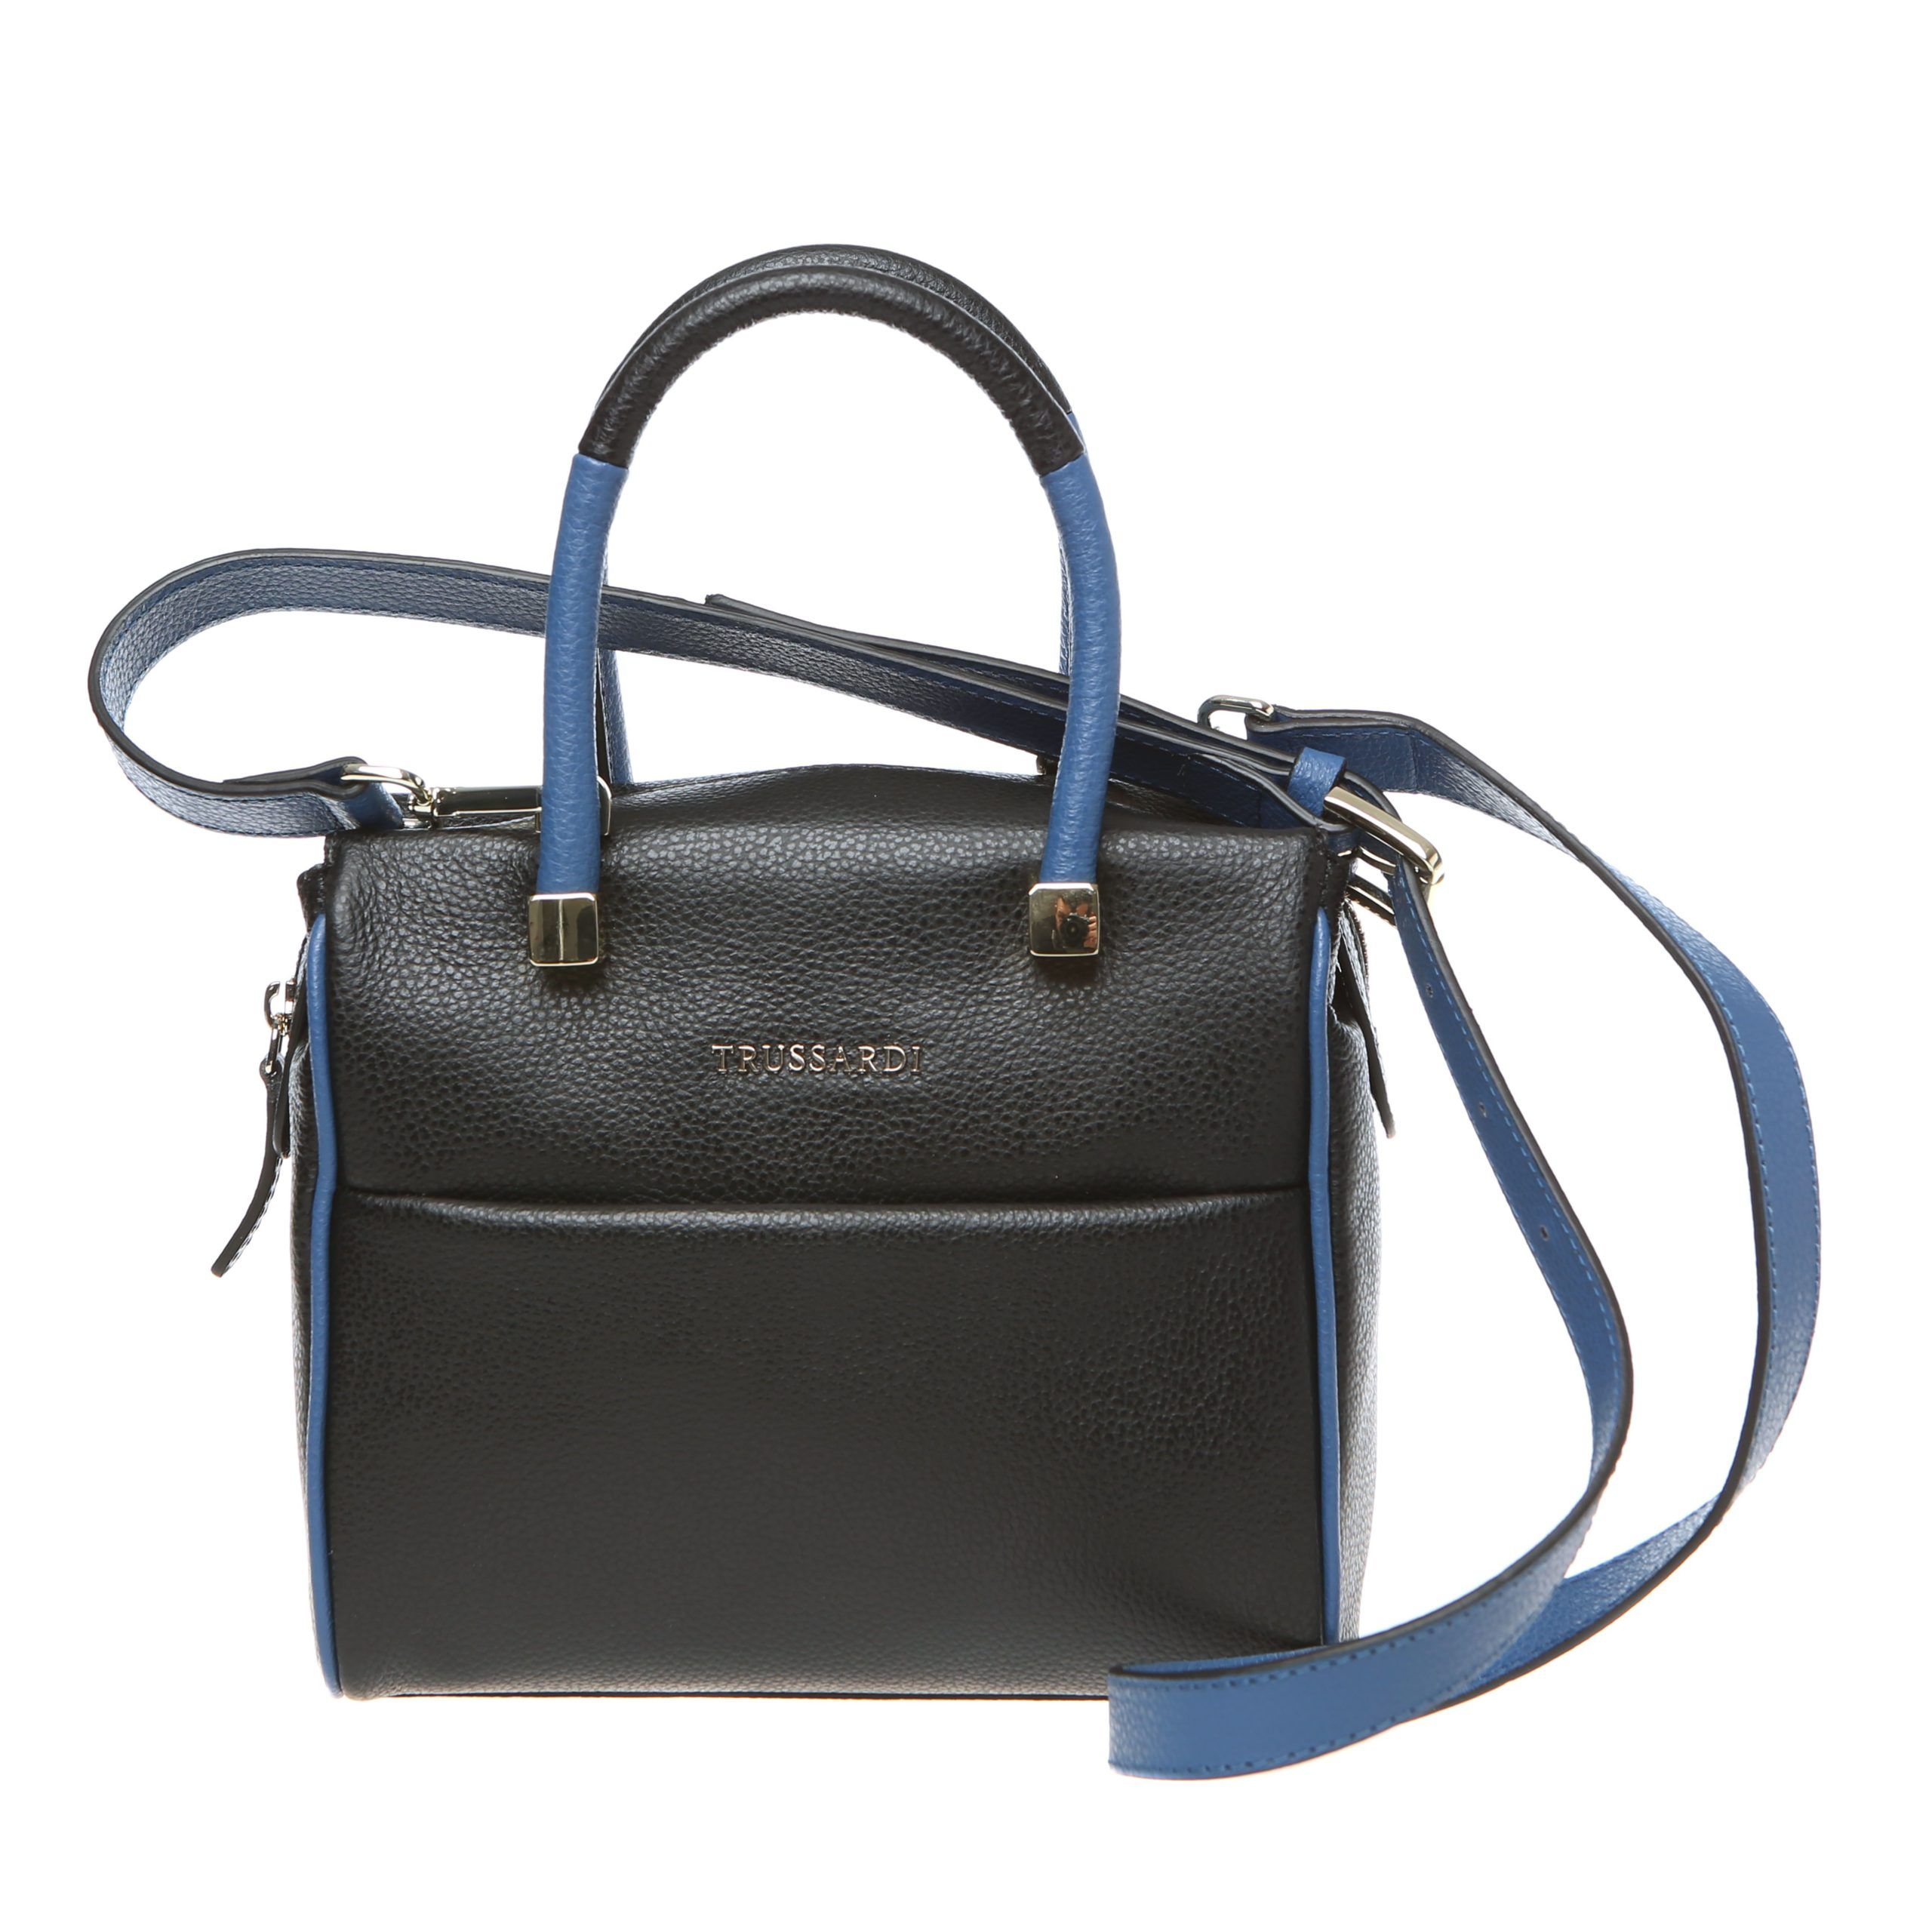 Women’s Handbag In Embossed Leather. Zip Closure. Removable Shoulder Strap. Internal Pocket. 20x17x11